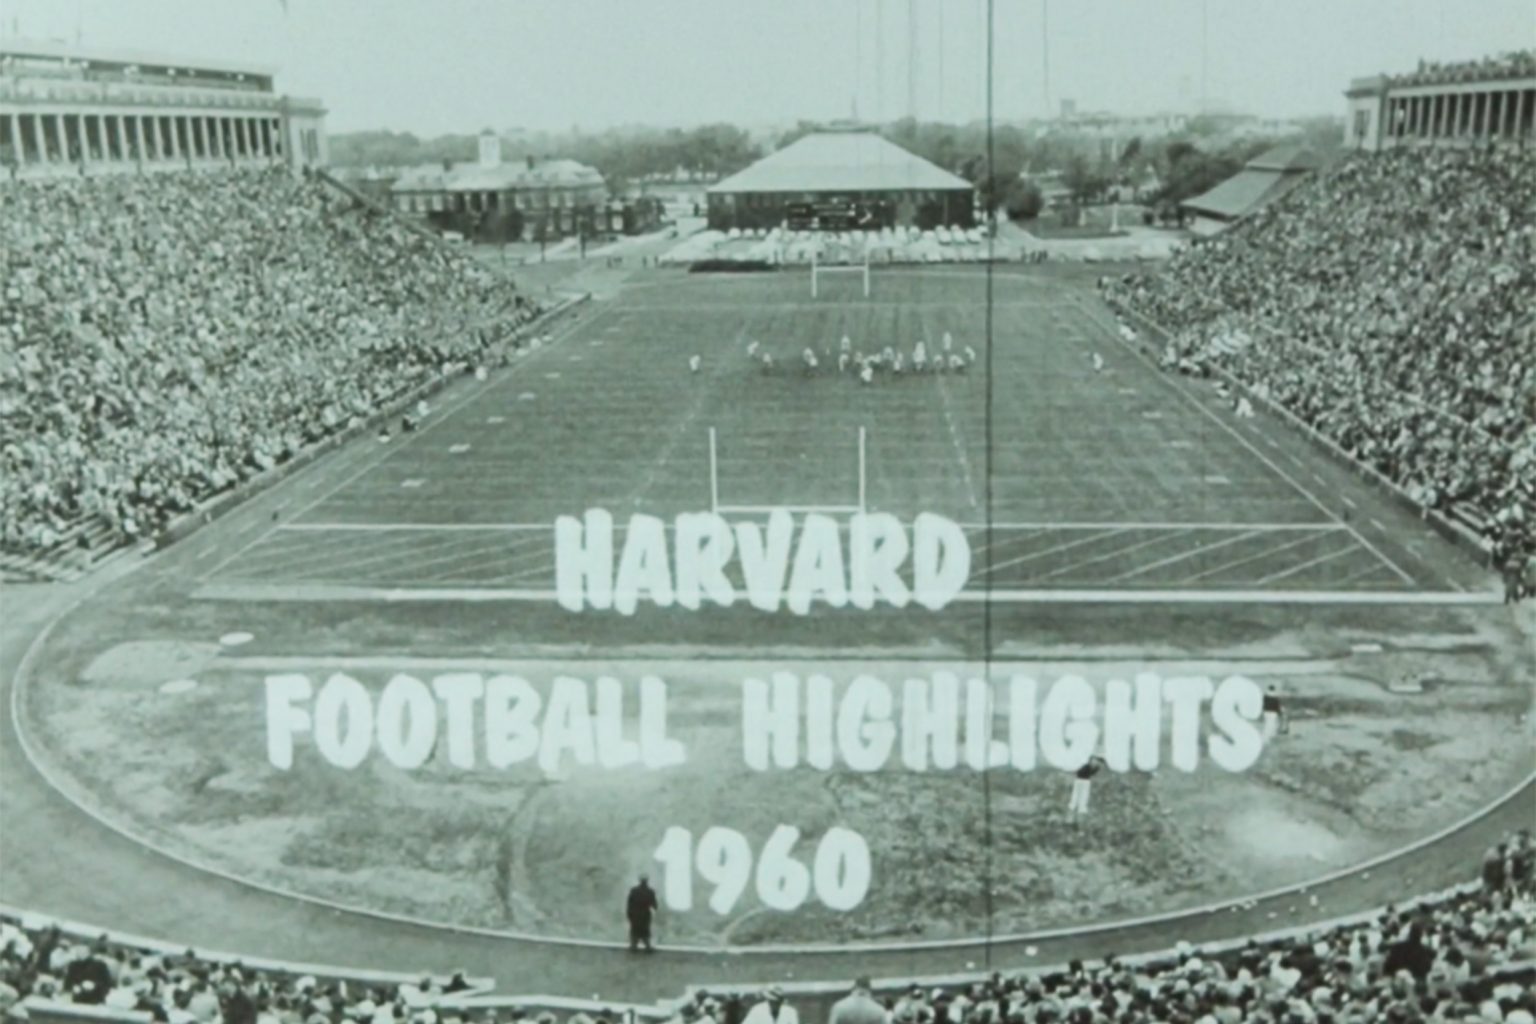 a black and white still of the Harvard stadium.